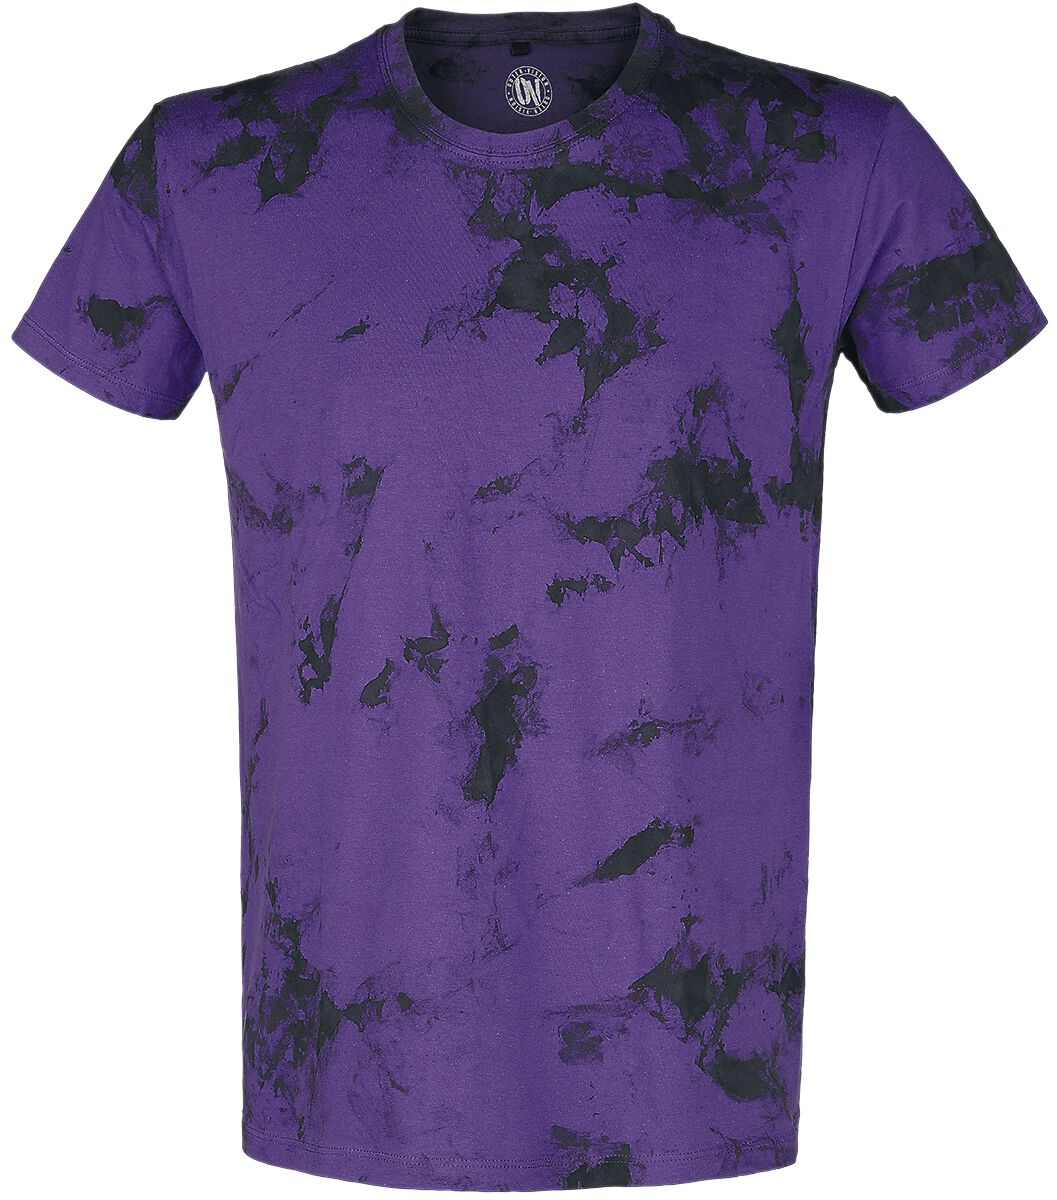 Outer Vision T-Shirt - Man`s T-Shirt - S bis XXL - für Männer - Größe XL - schwarz/lila